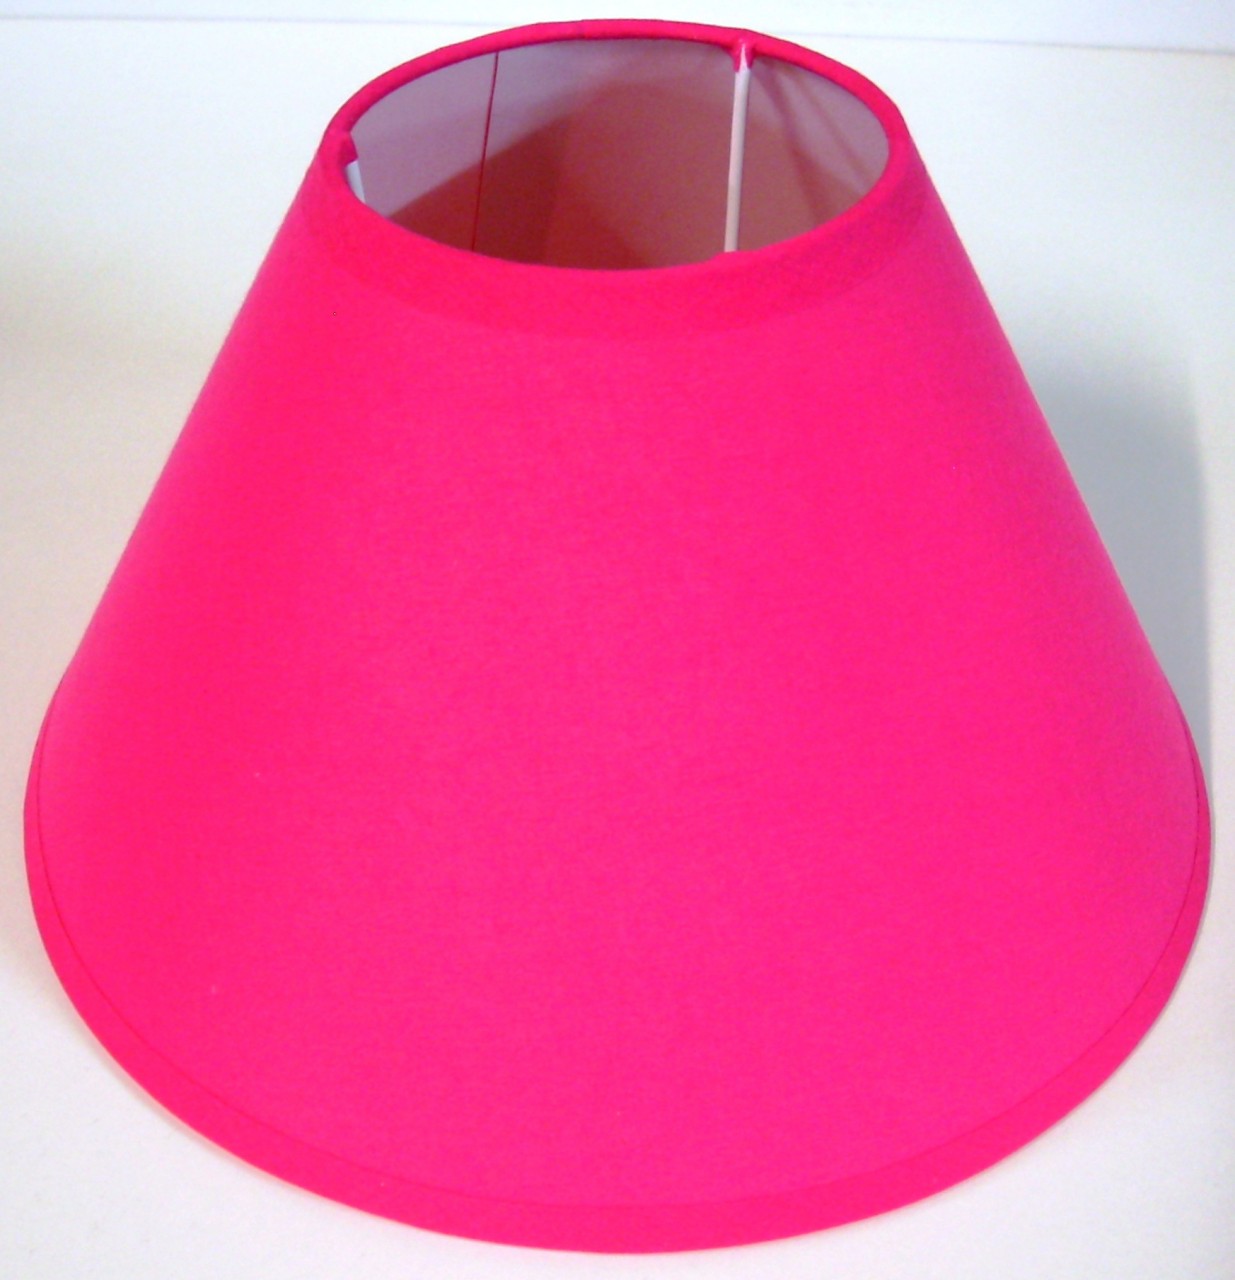 10 Reasons To Purchase Hot Pink Lamps Warisan Lighting